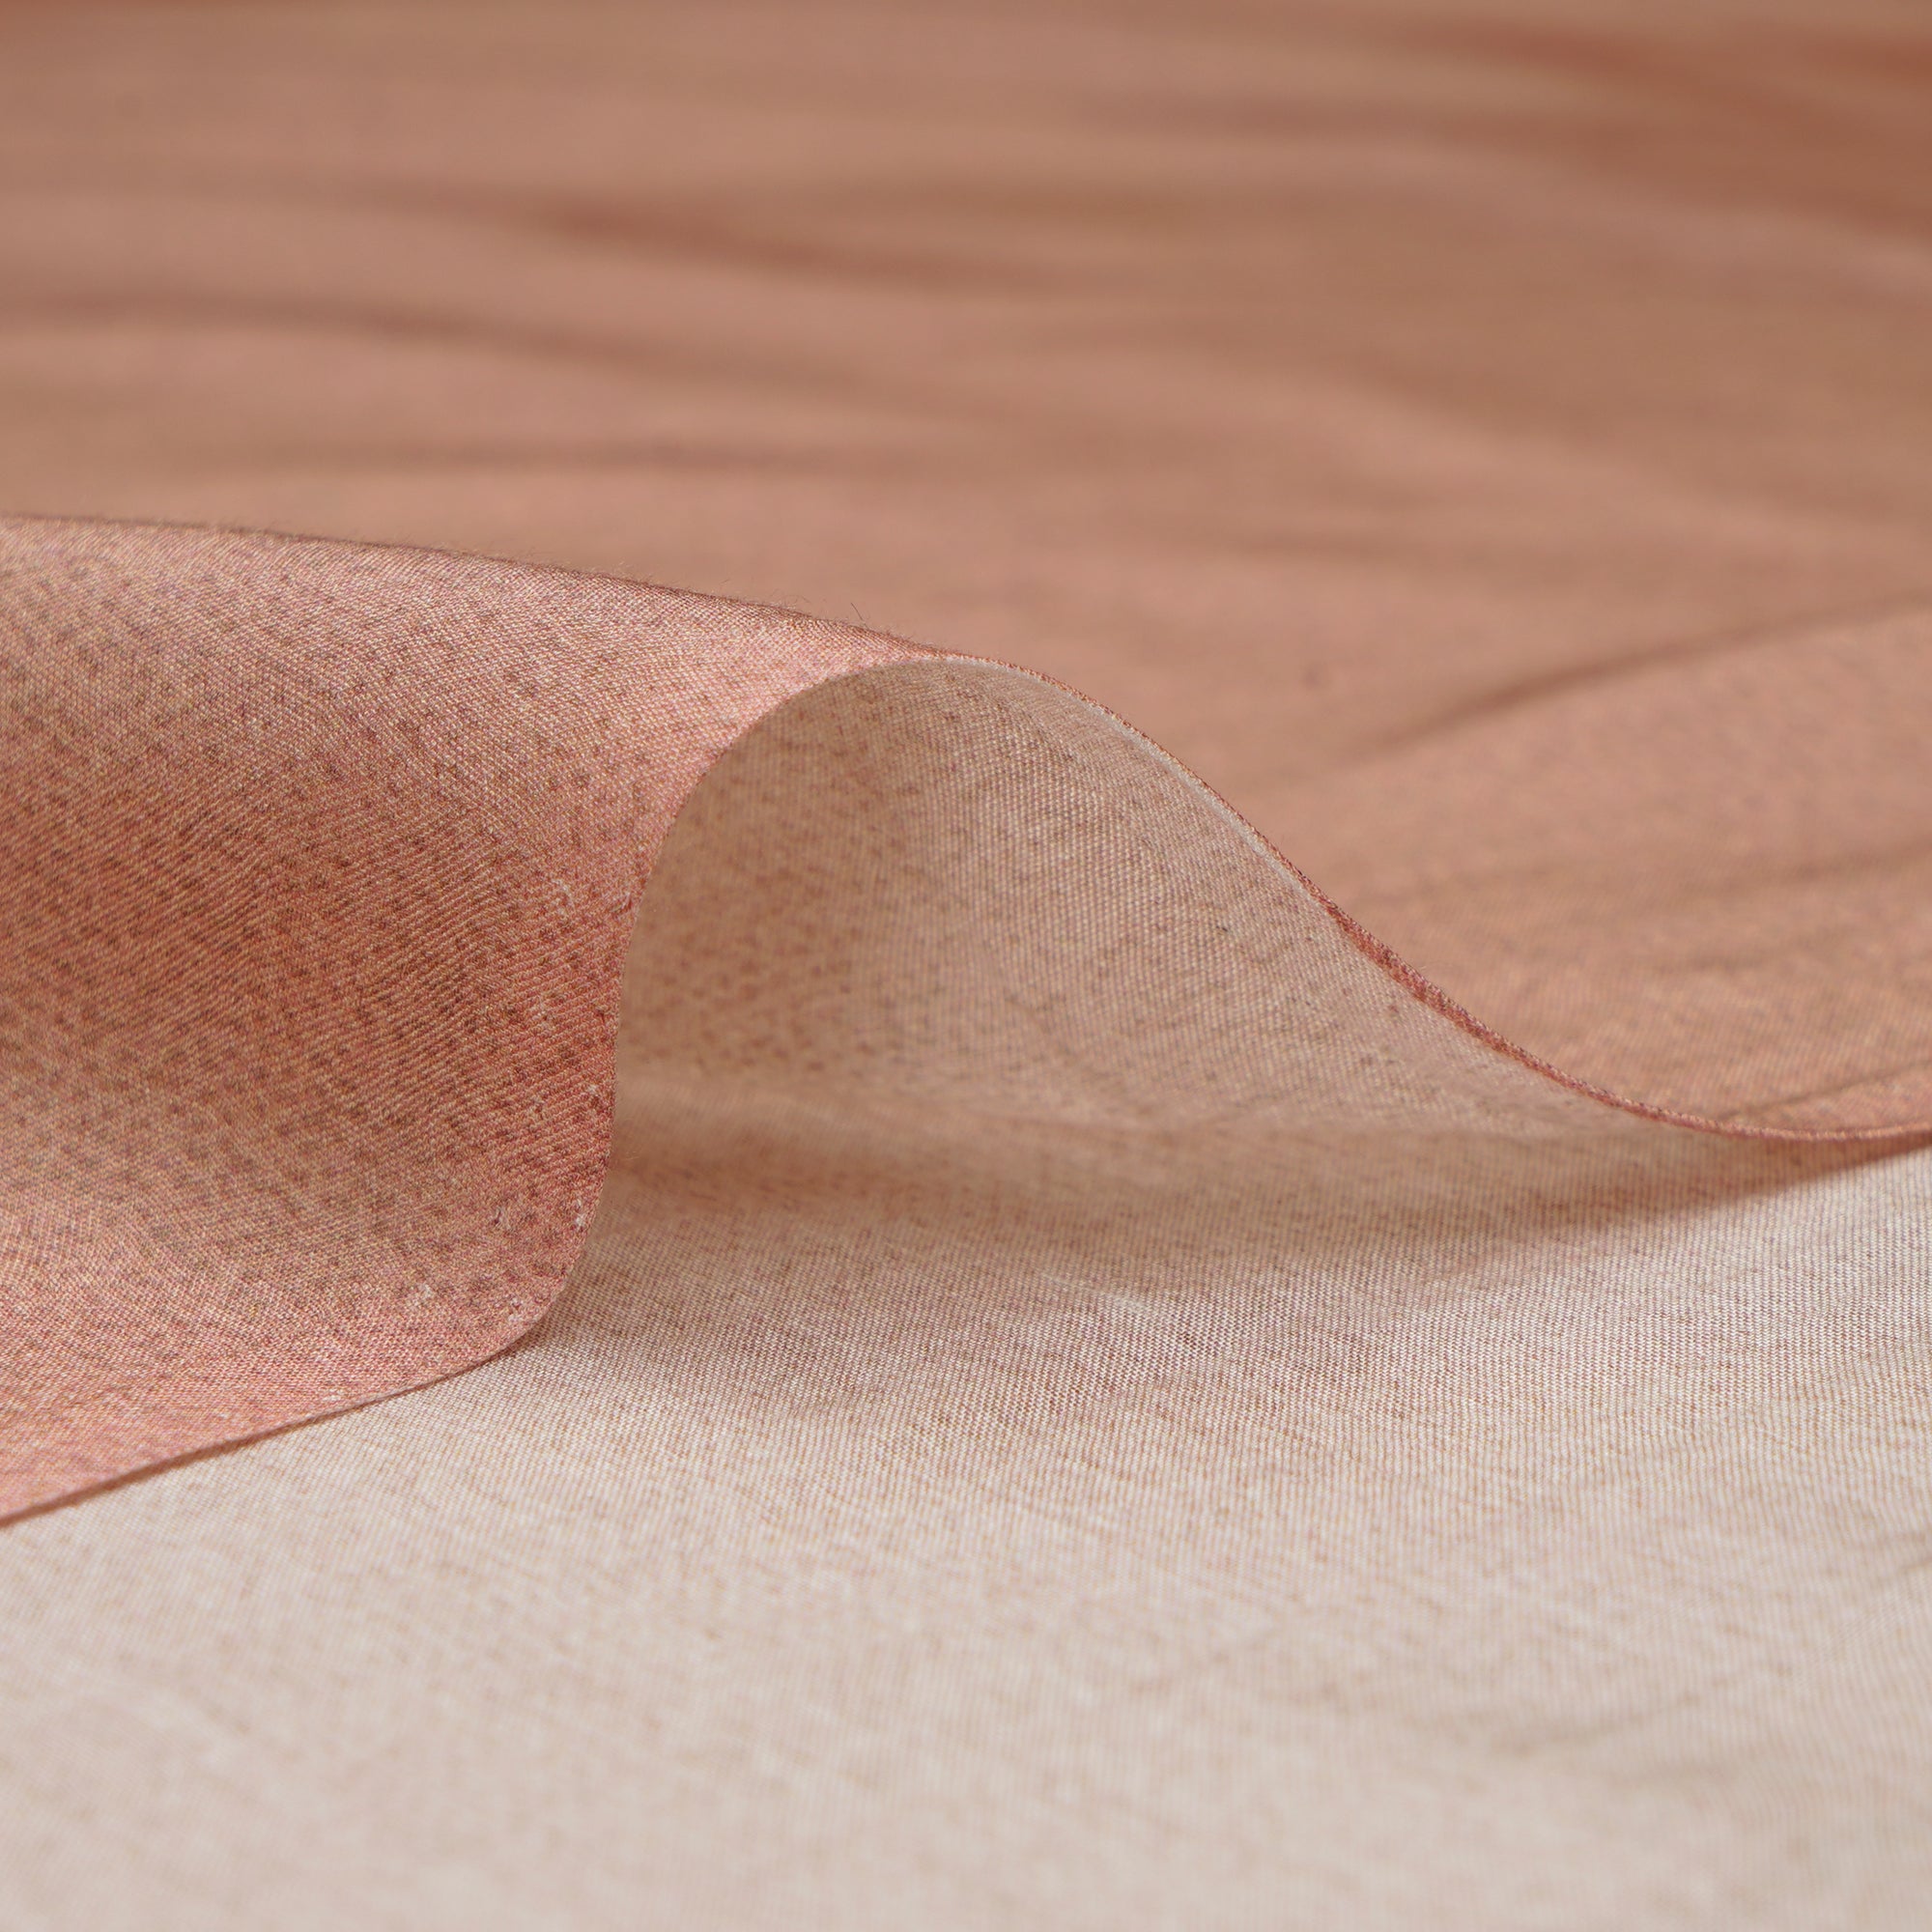 Maple Sugar AllOver Pattern Digital Print Bemberg Modal Fabric